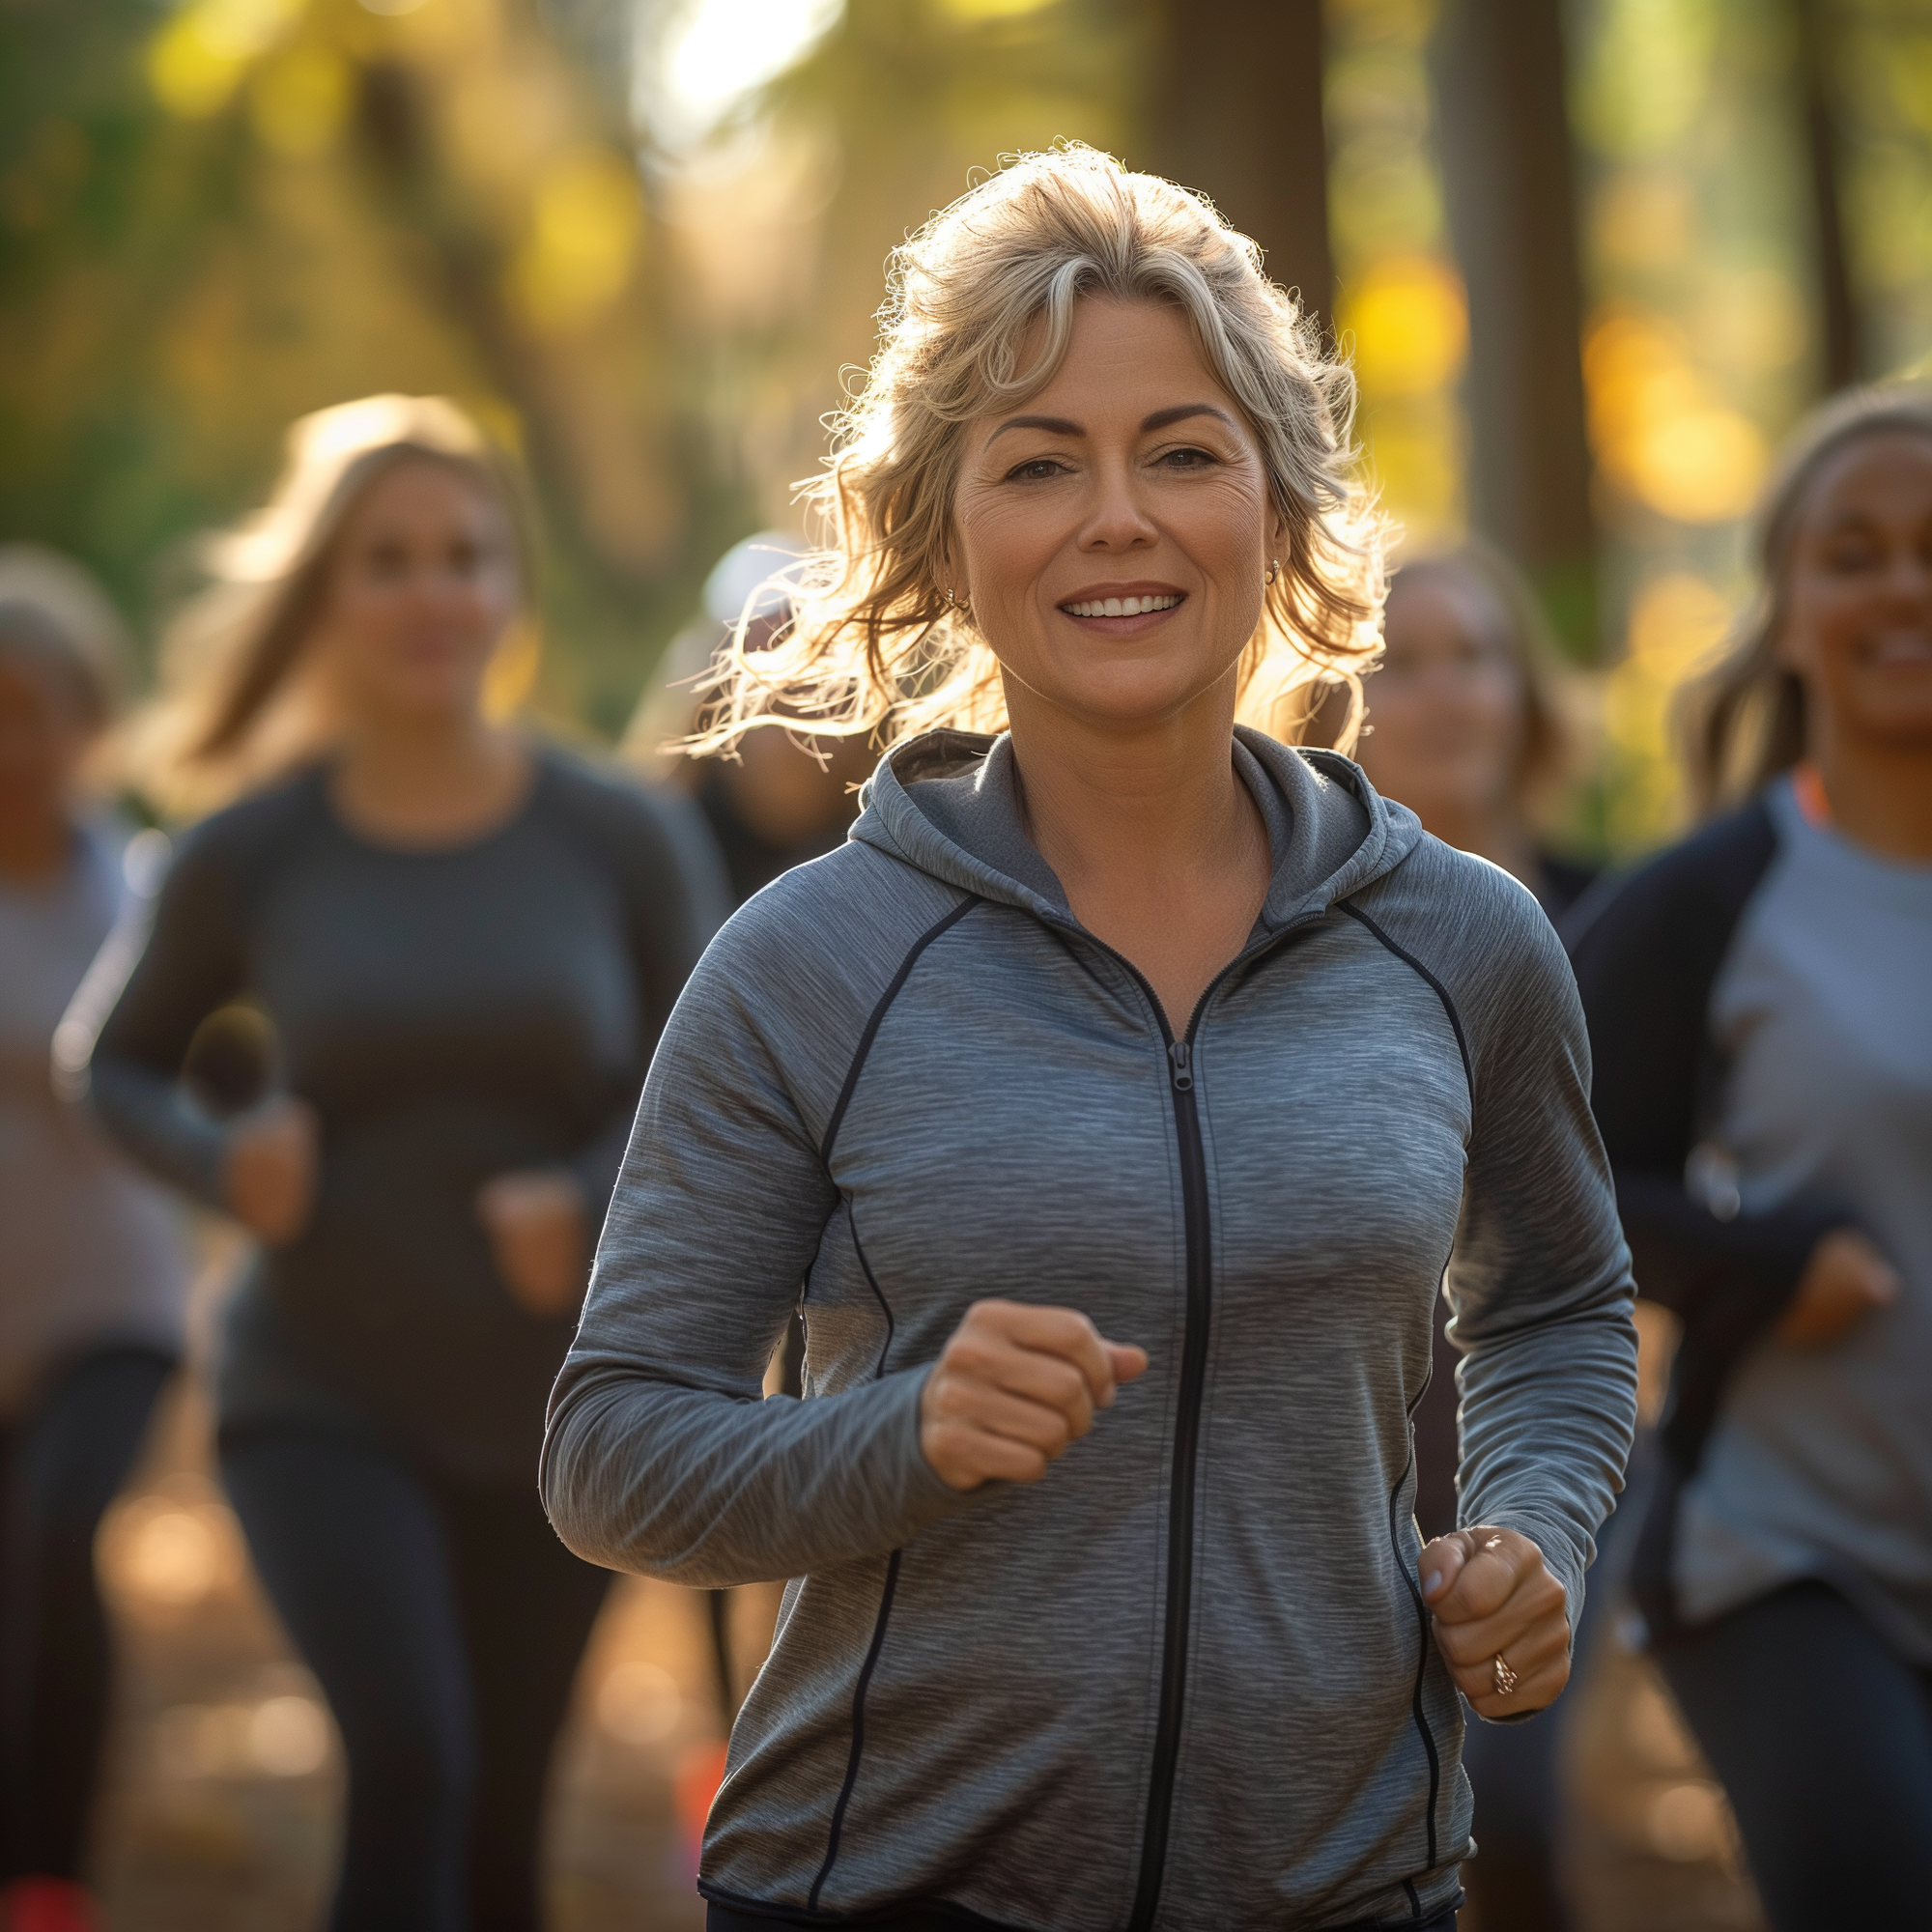 An image of women briskly walking to combat brain shrinkage.